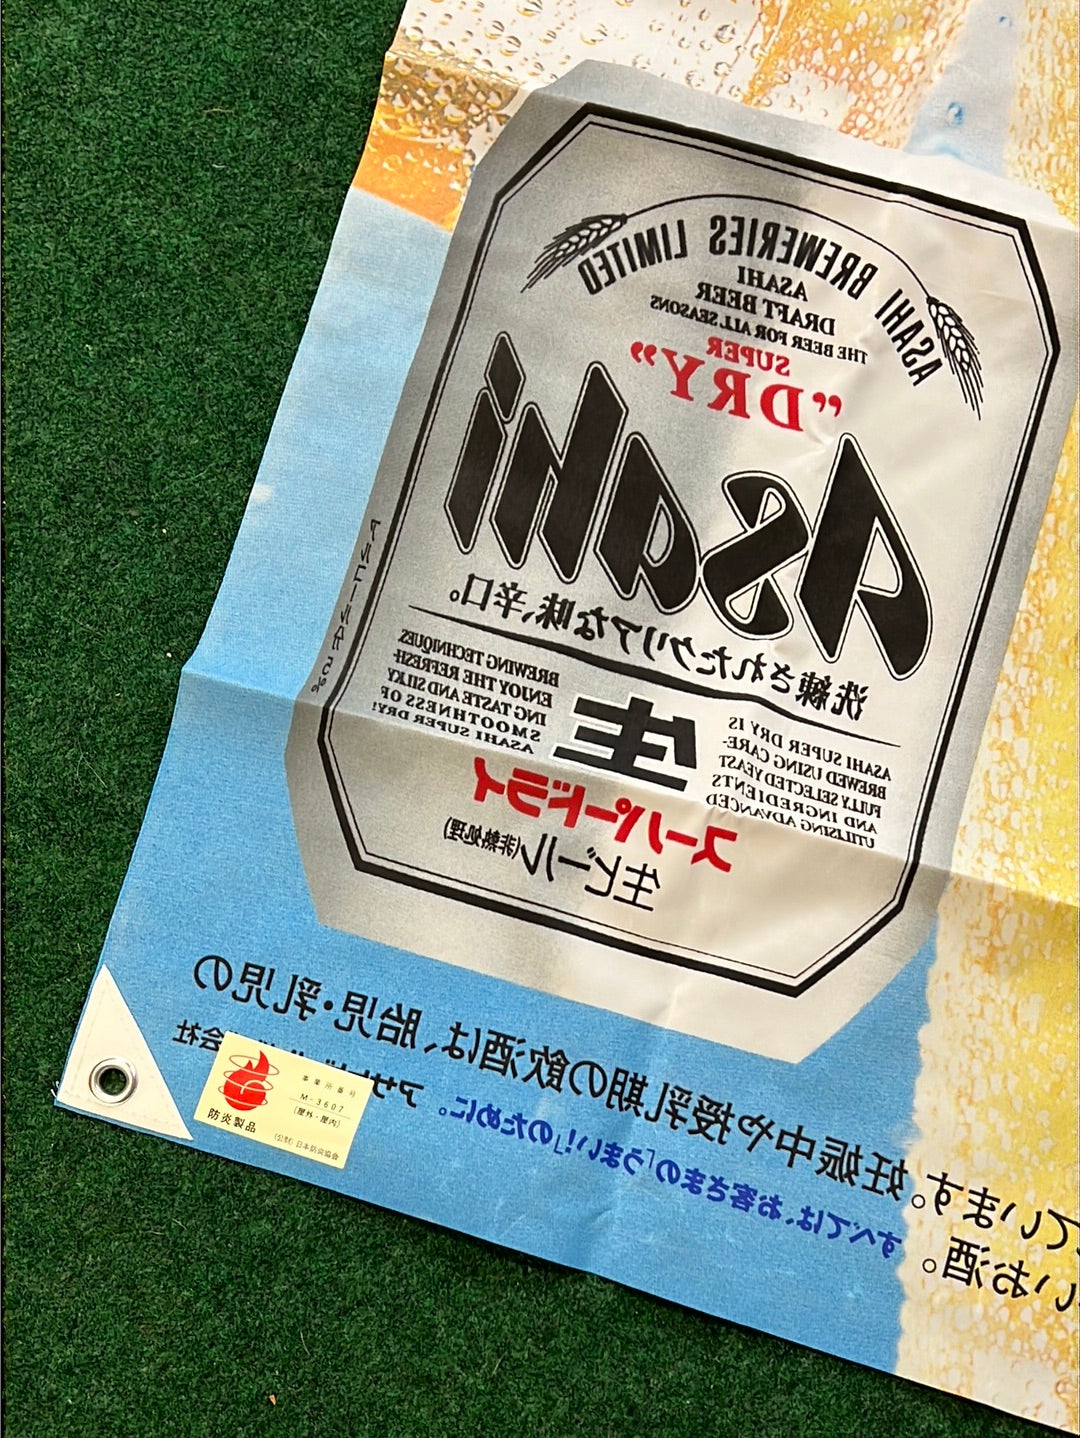 Asahi Beer - “Super Dry” Large Advertising Banner